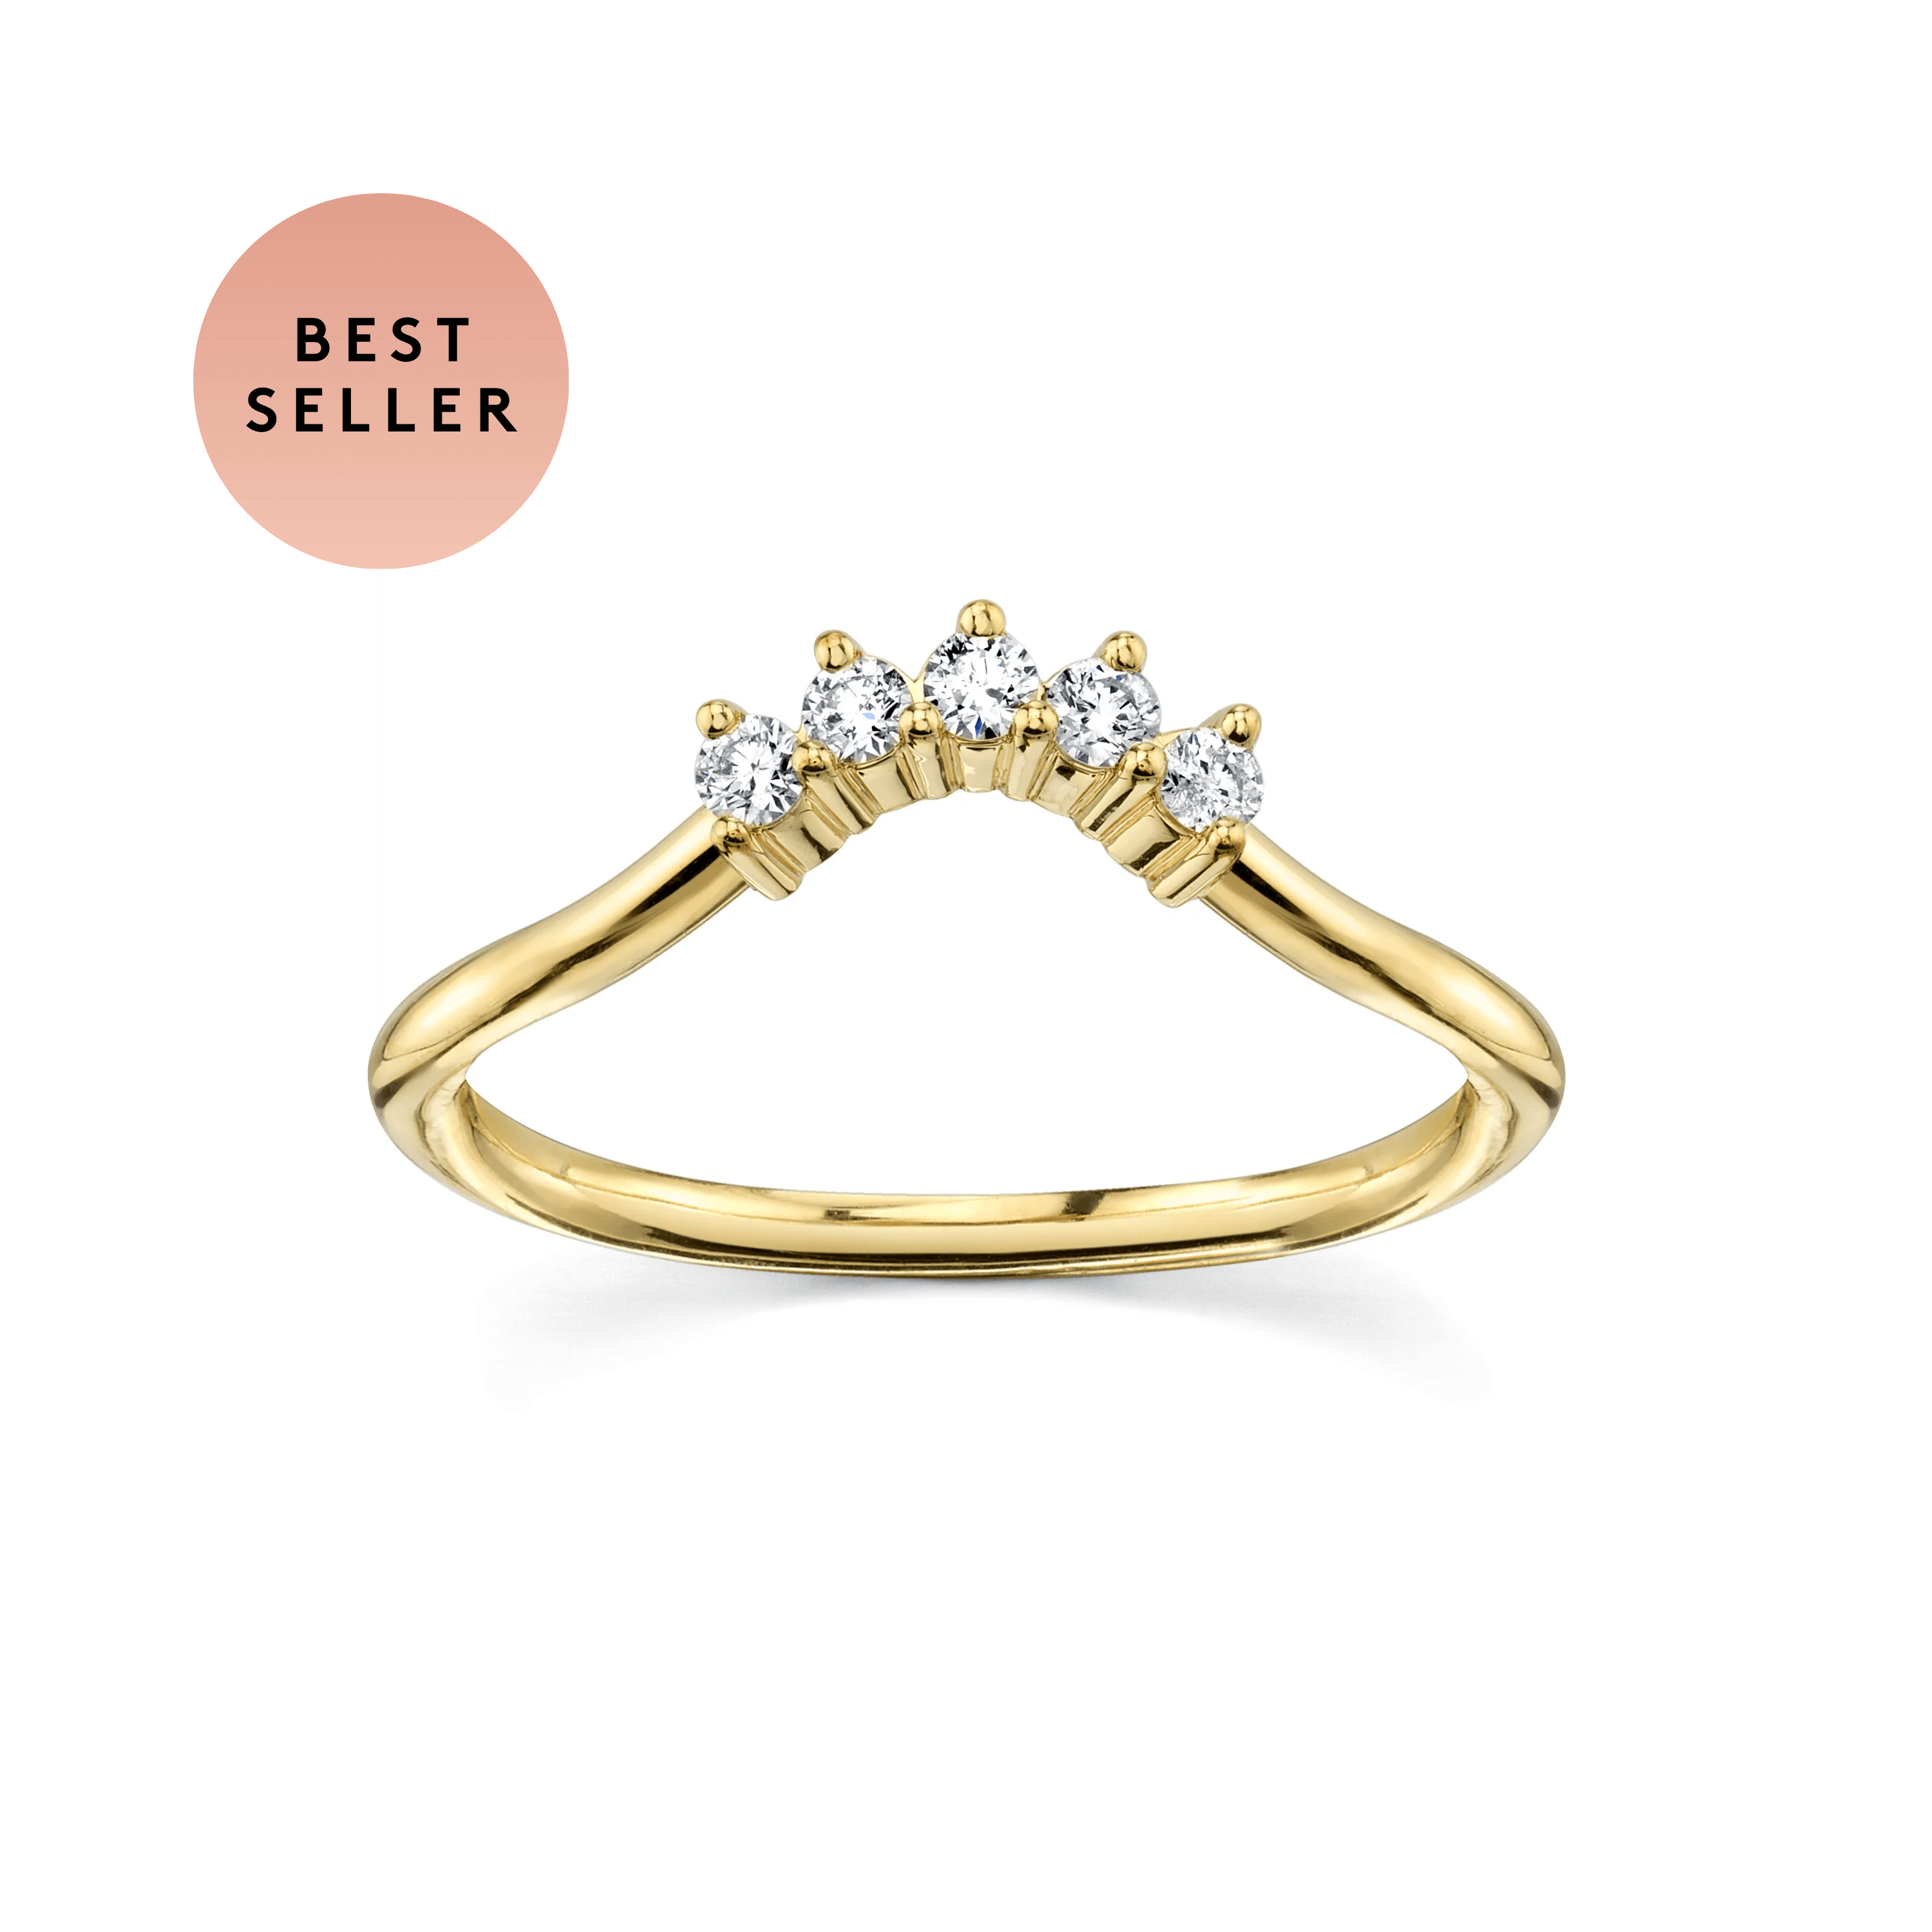 Diana Heimann 18K Gold “Crown” Ring - Abracadabra Jewelry / Gem Gallery